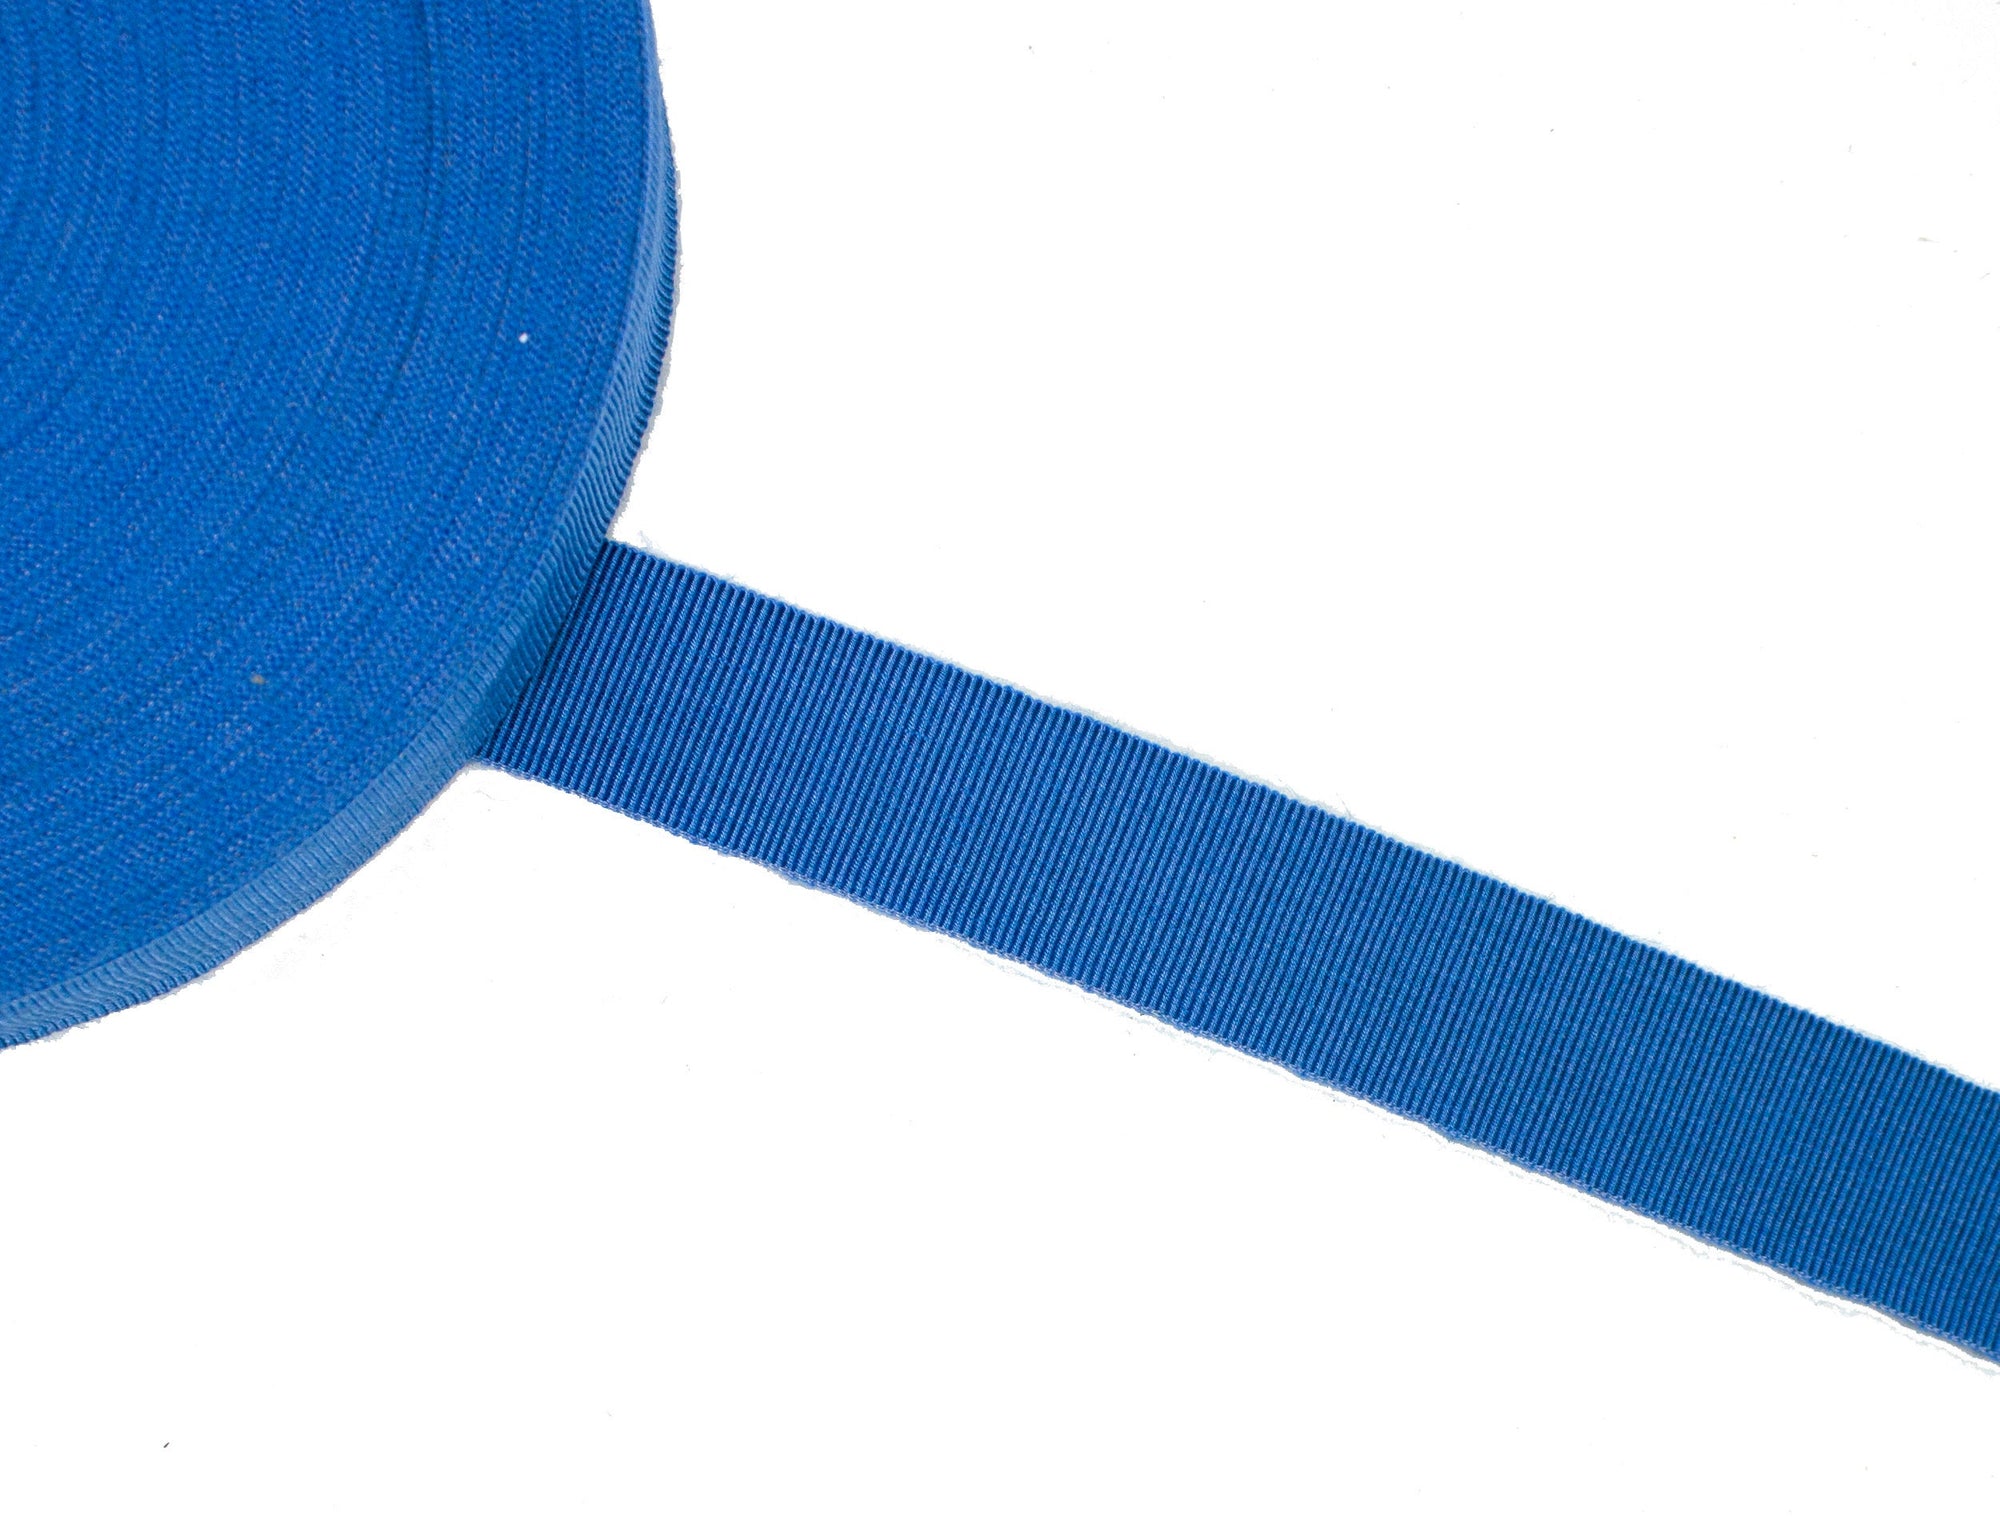 Vintage Petersham Ribbon Royal Blue  Measures 24 mm Wide - Sold by the Yard